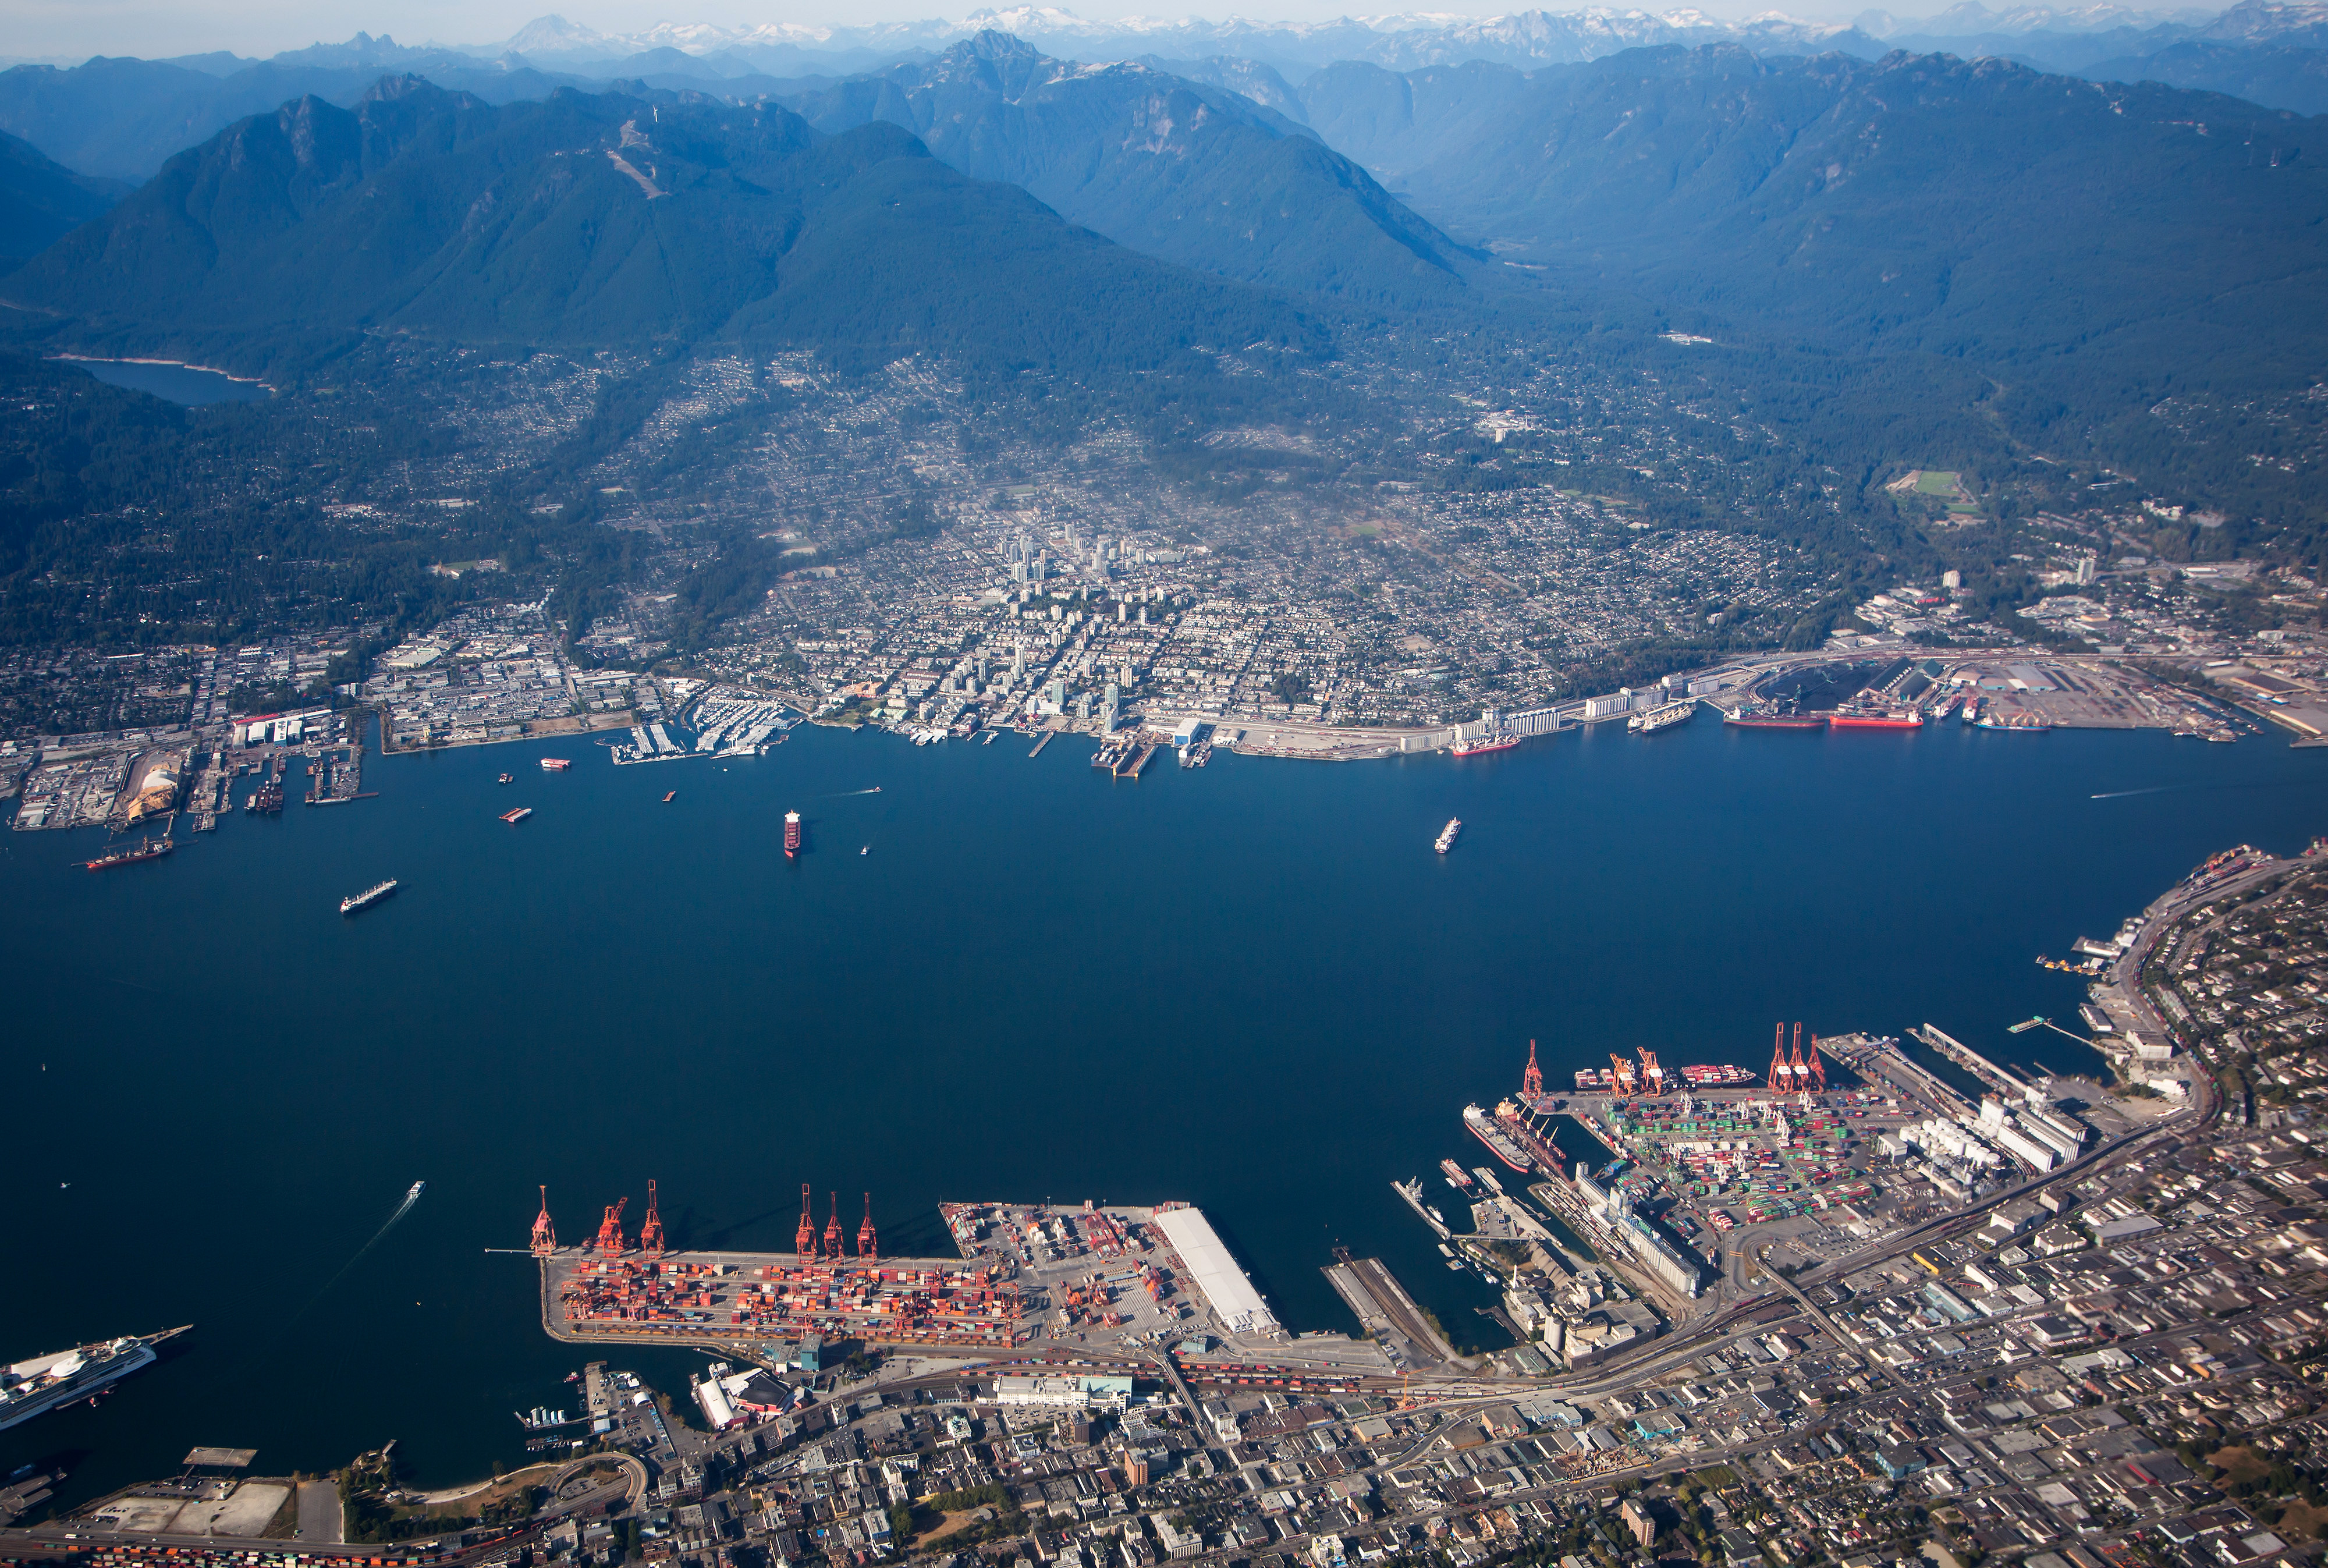 Canada oil sands Asia export dream faces port bottleneck